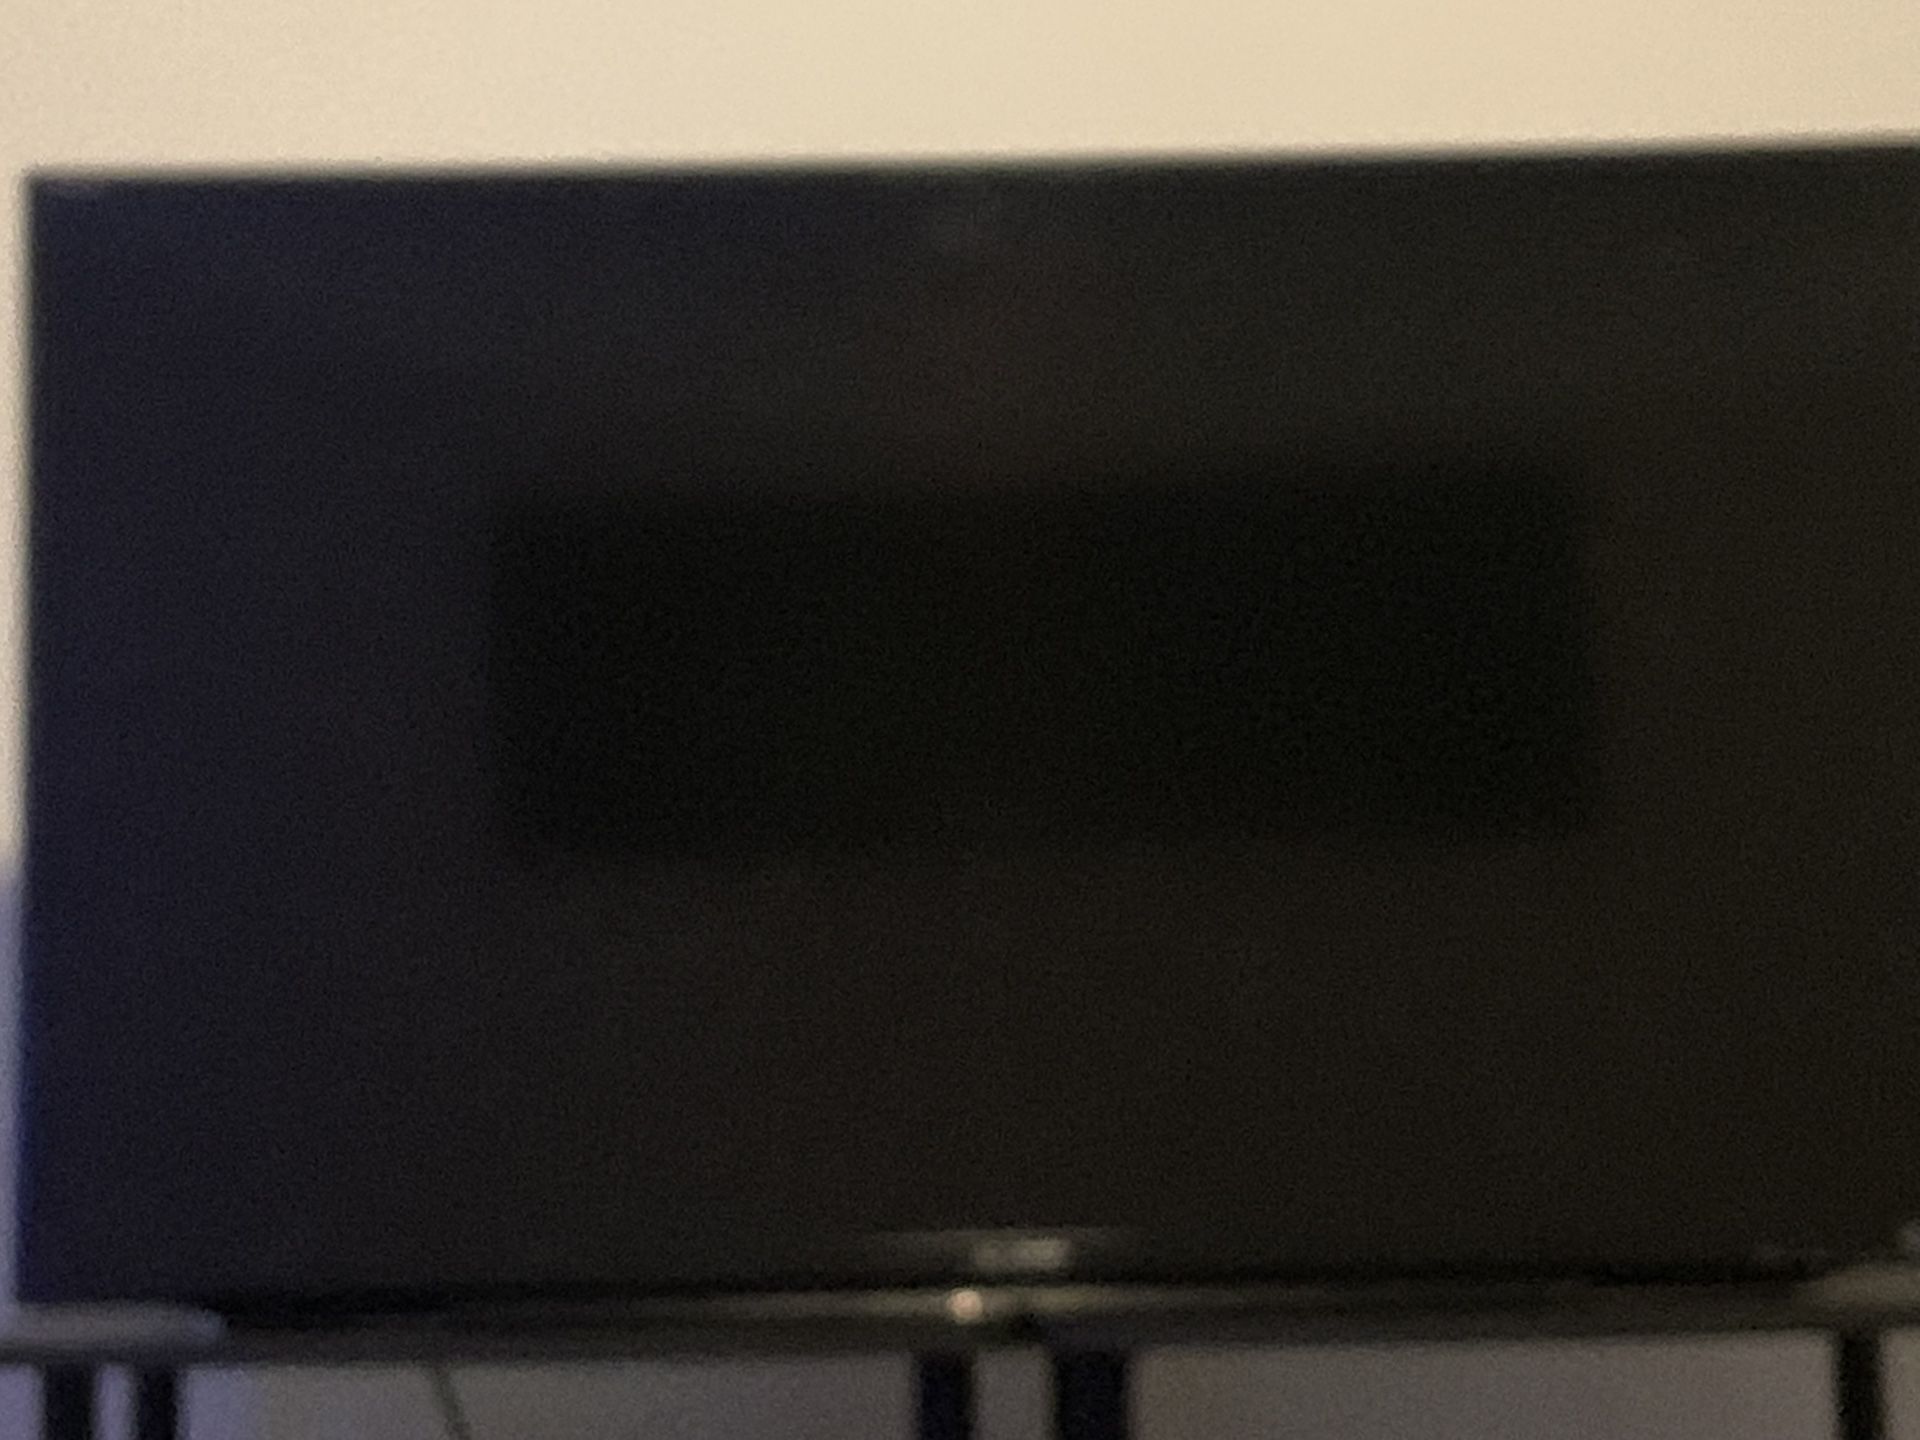 Sony smart tv 42 inch